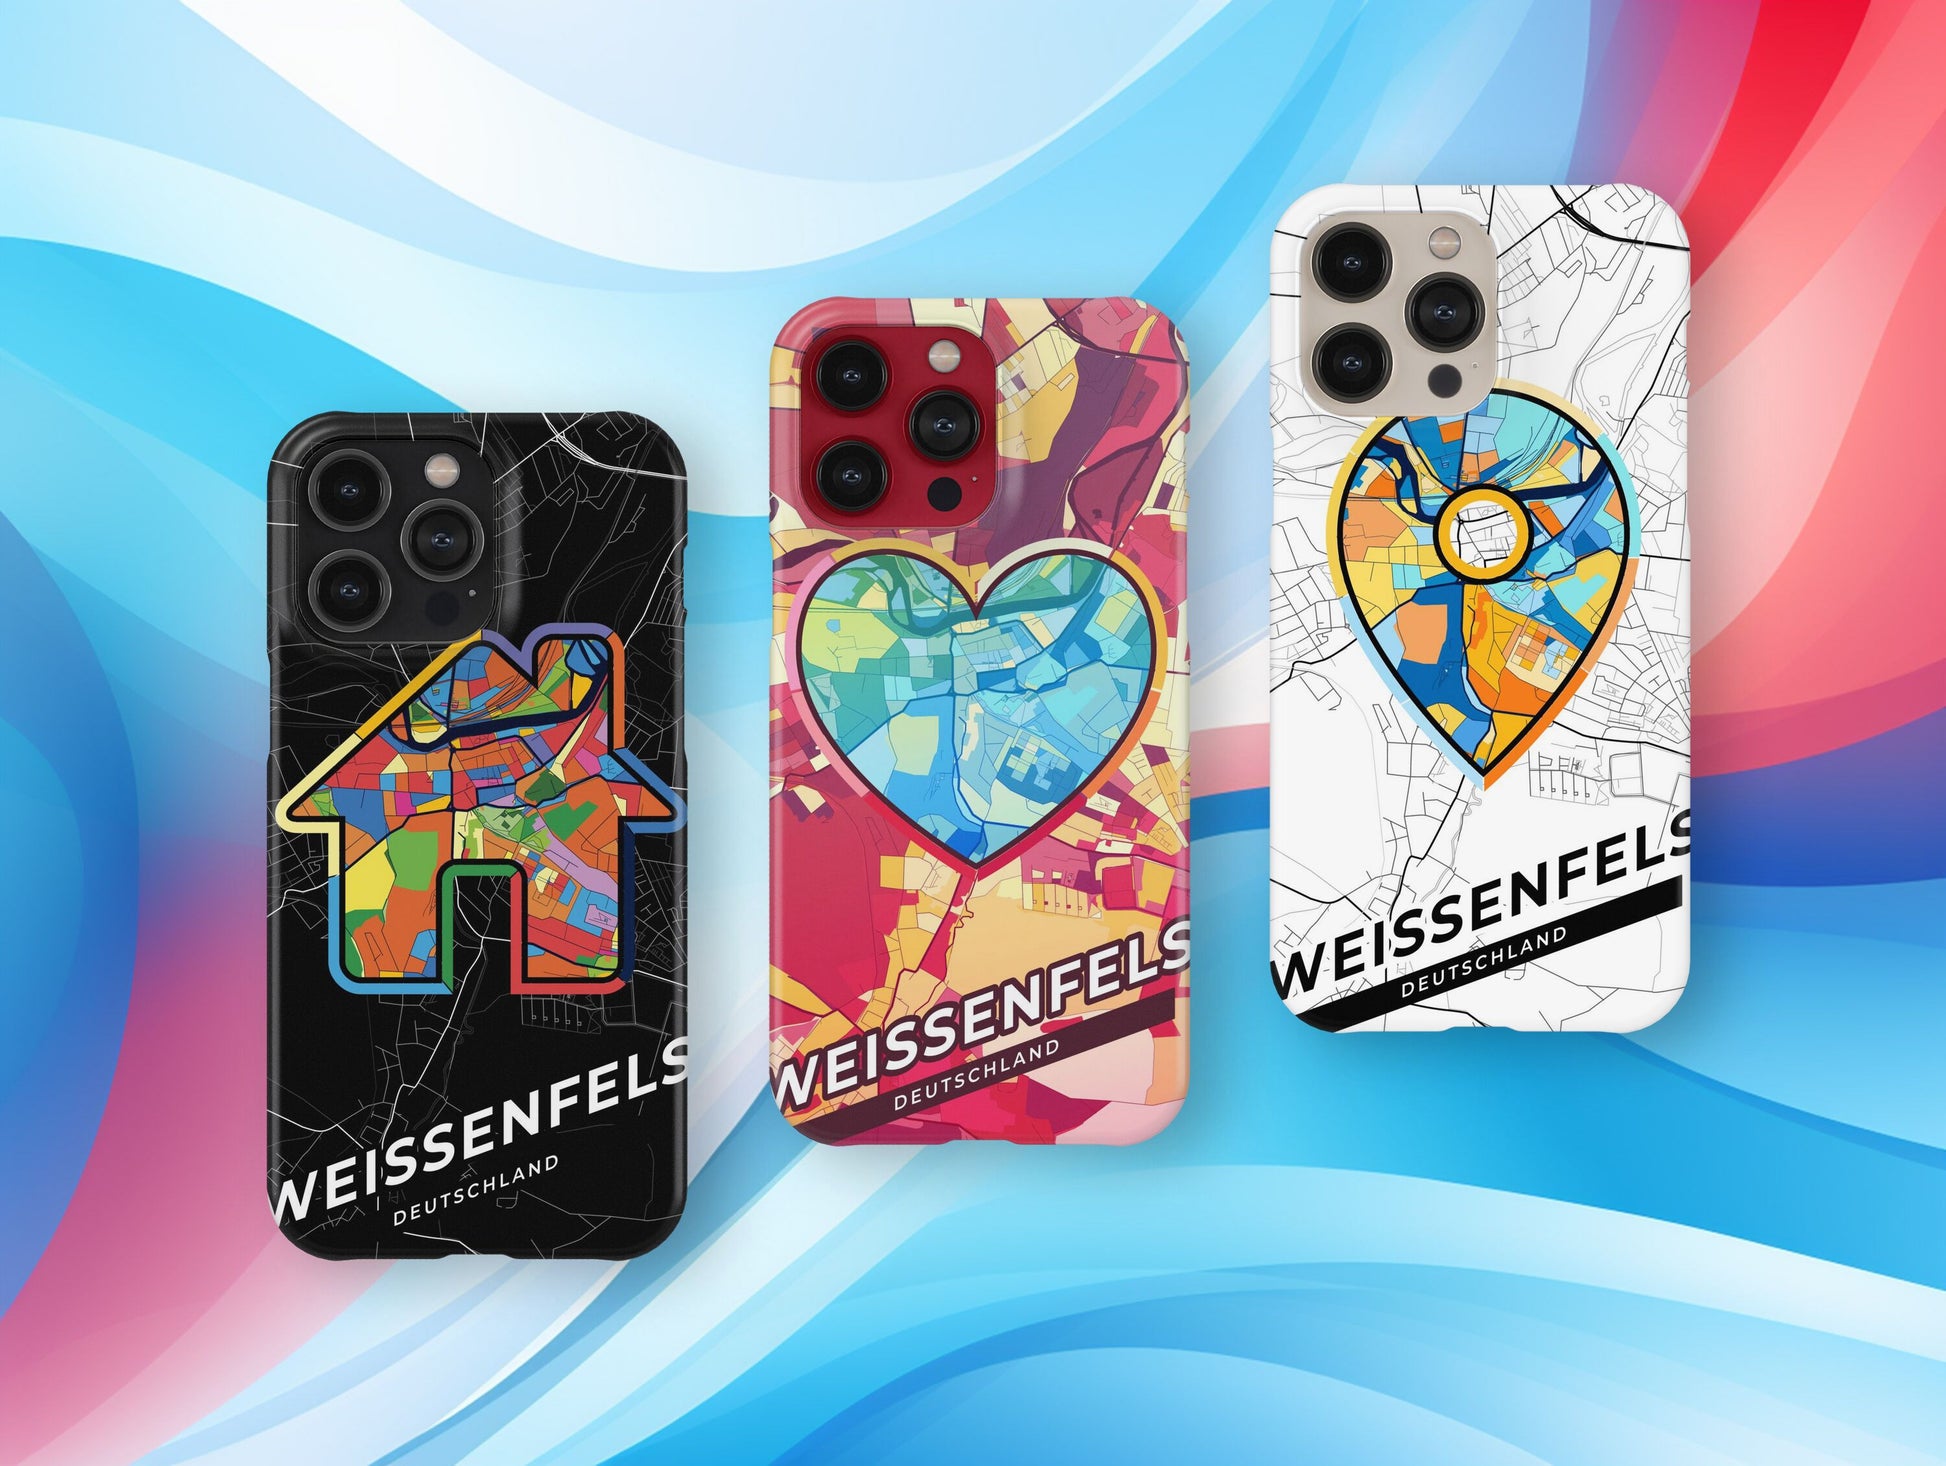 Weissenfels Deutschland slim phone case with colorful icon